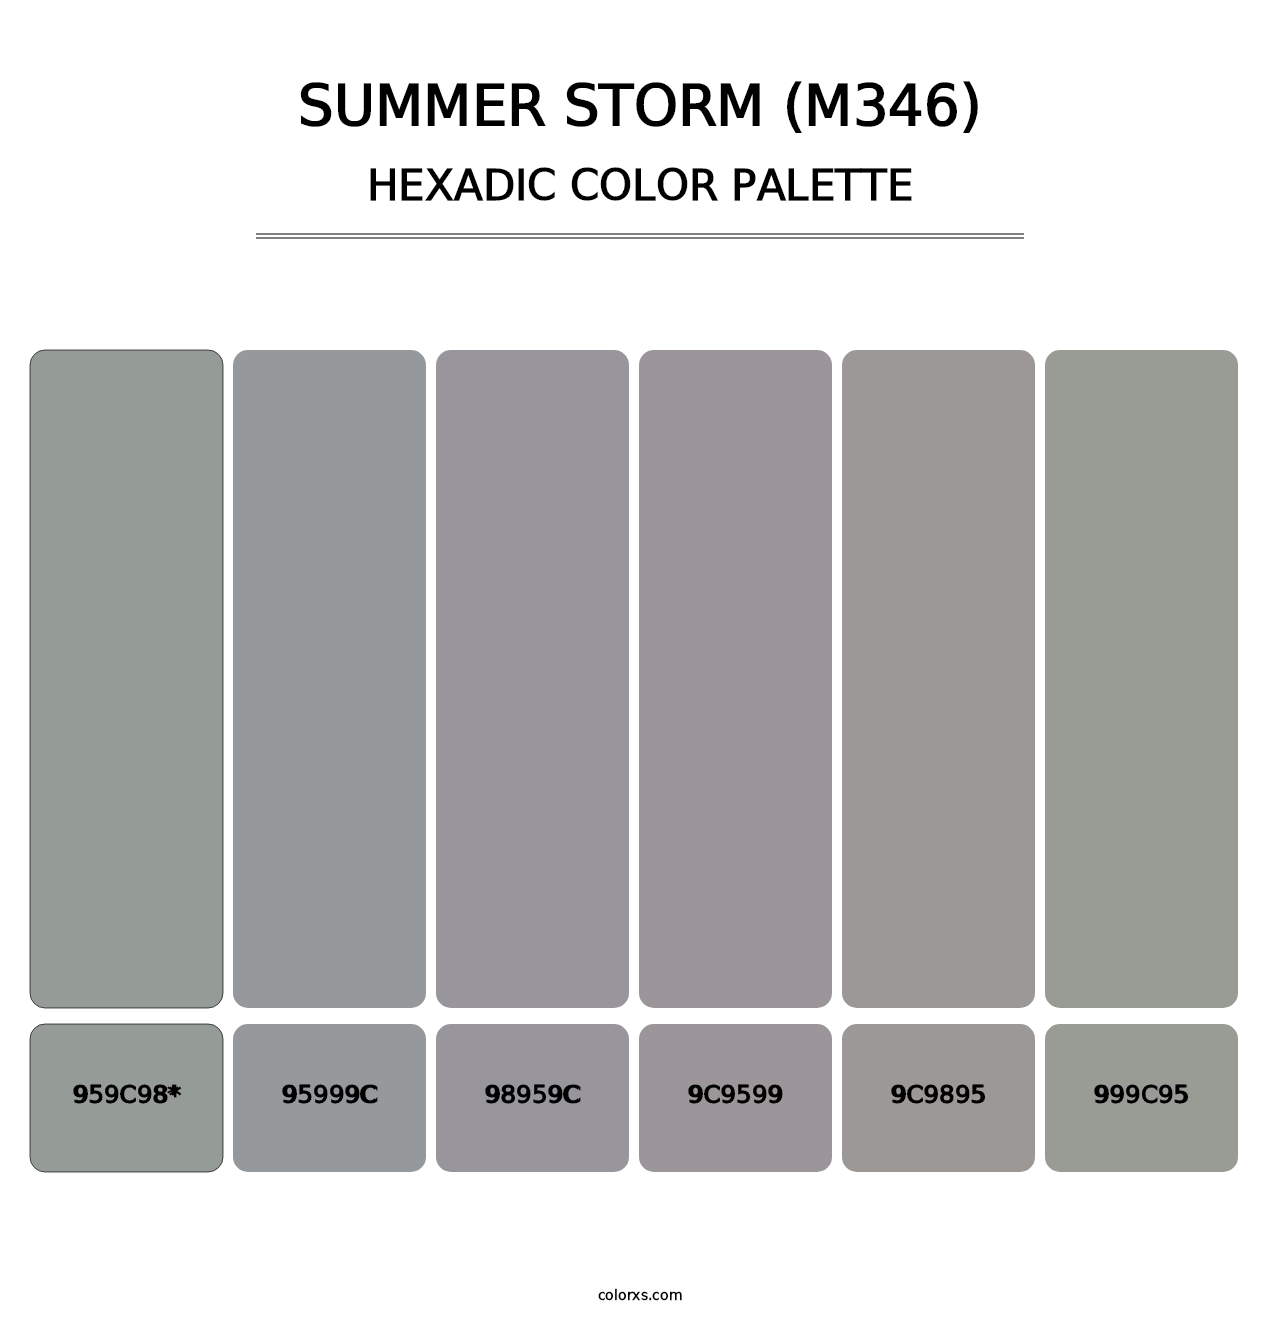 Summer Storm (M346) - Hexadic Color Palette